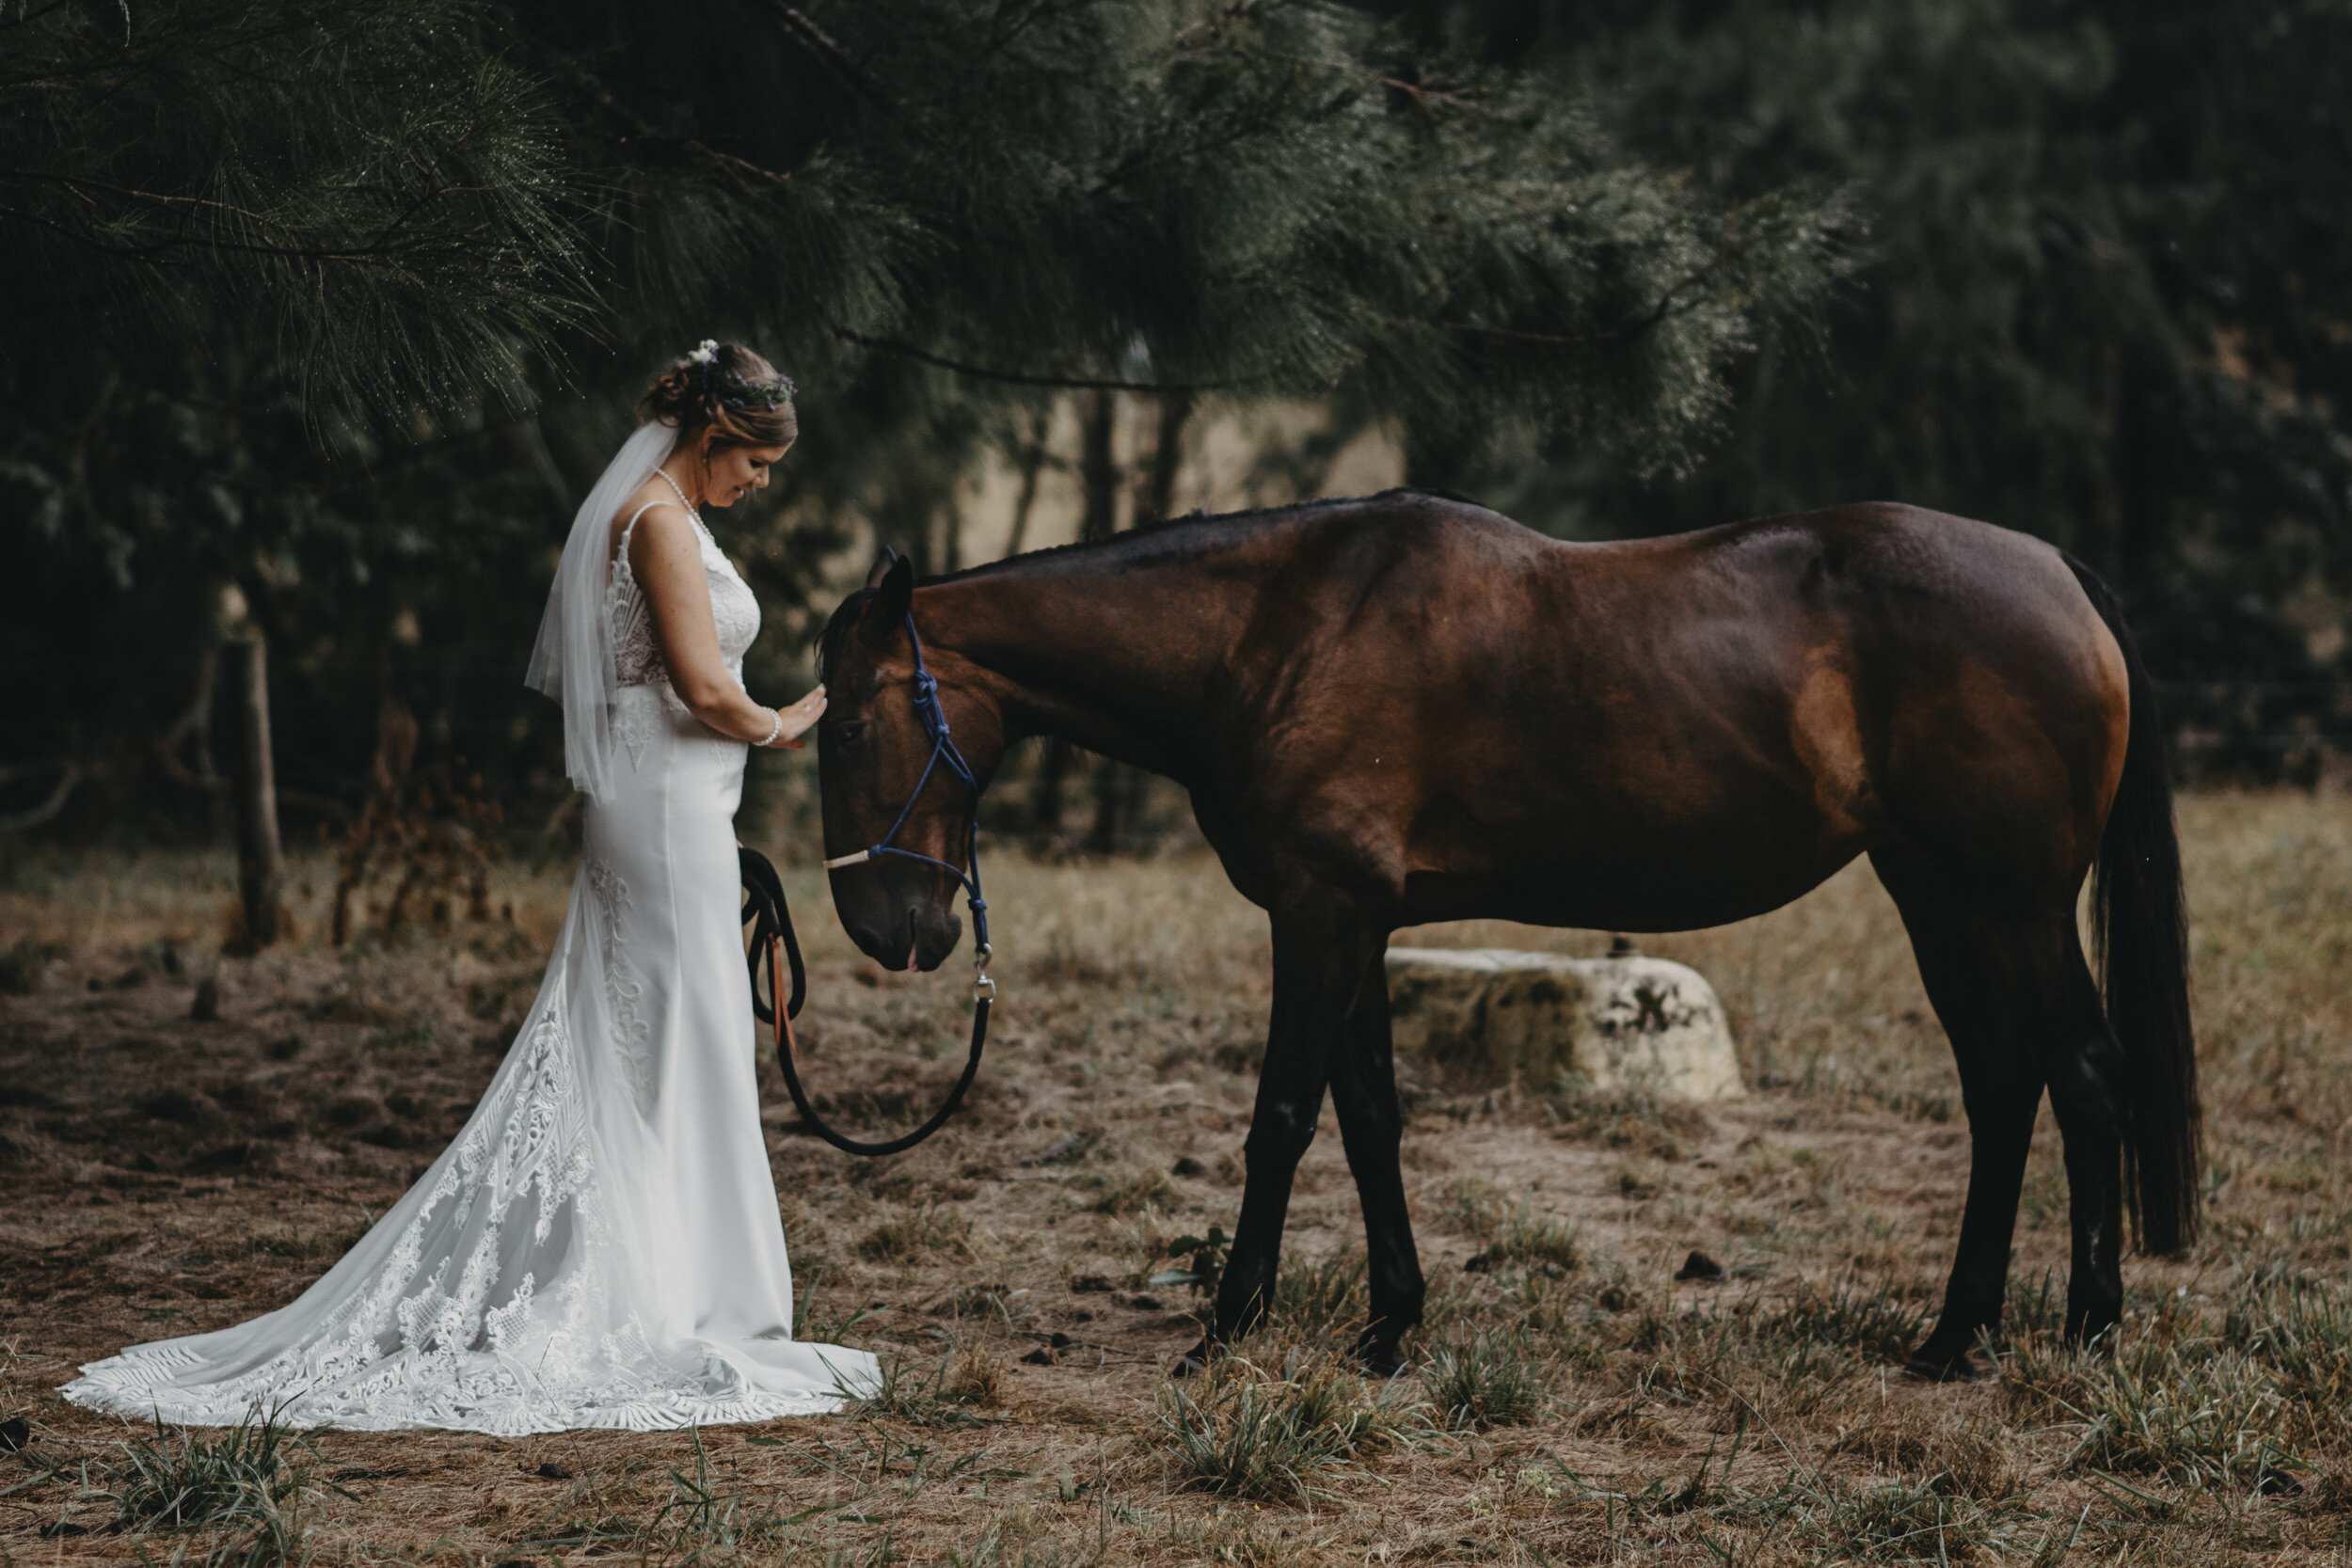 Auckland Wedding Photographer | Auckland Wedding Videographer | DIY Wedding | AucklandPhotographer | Auckland Wedding Venue 